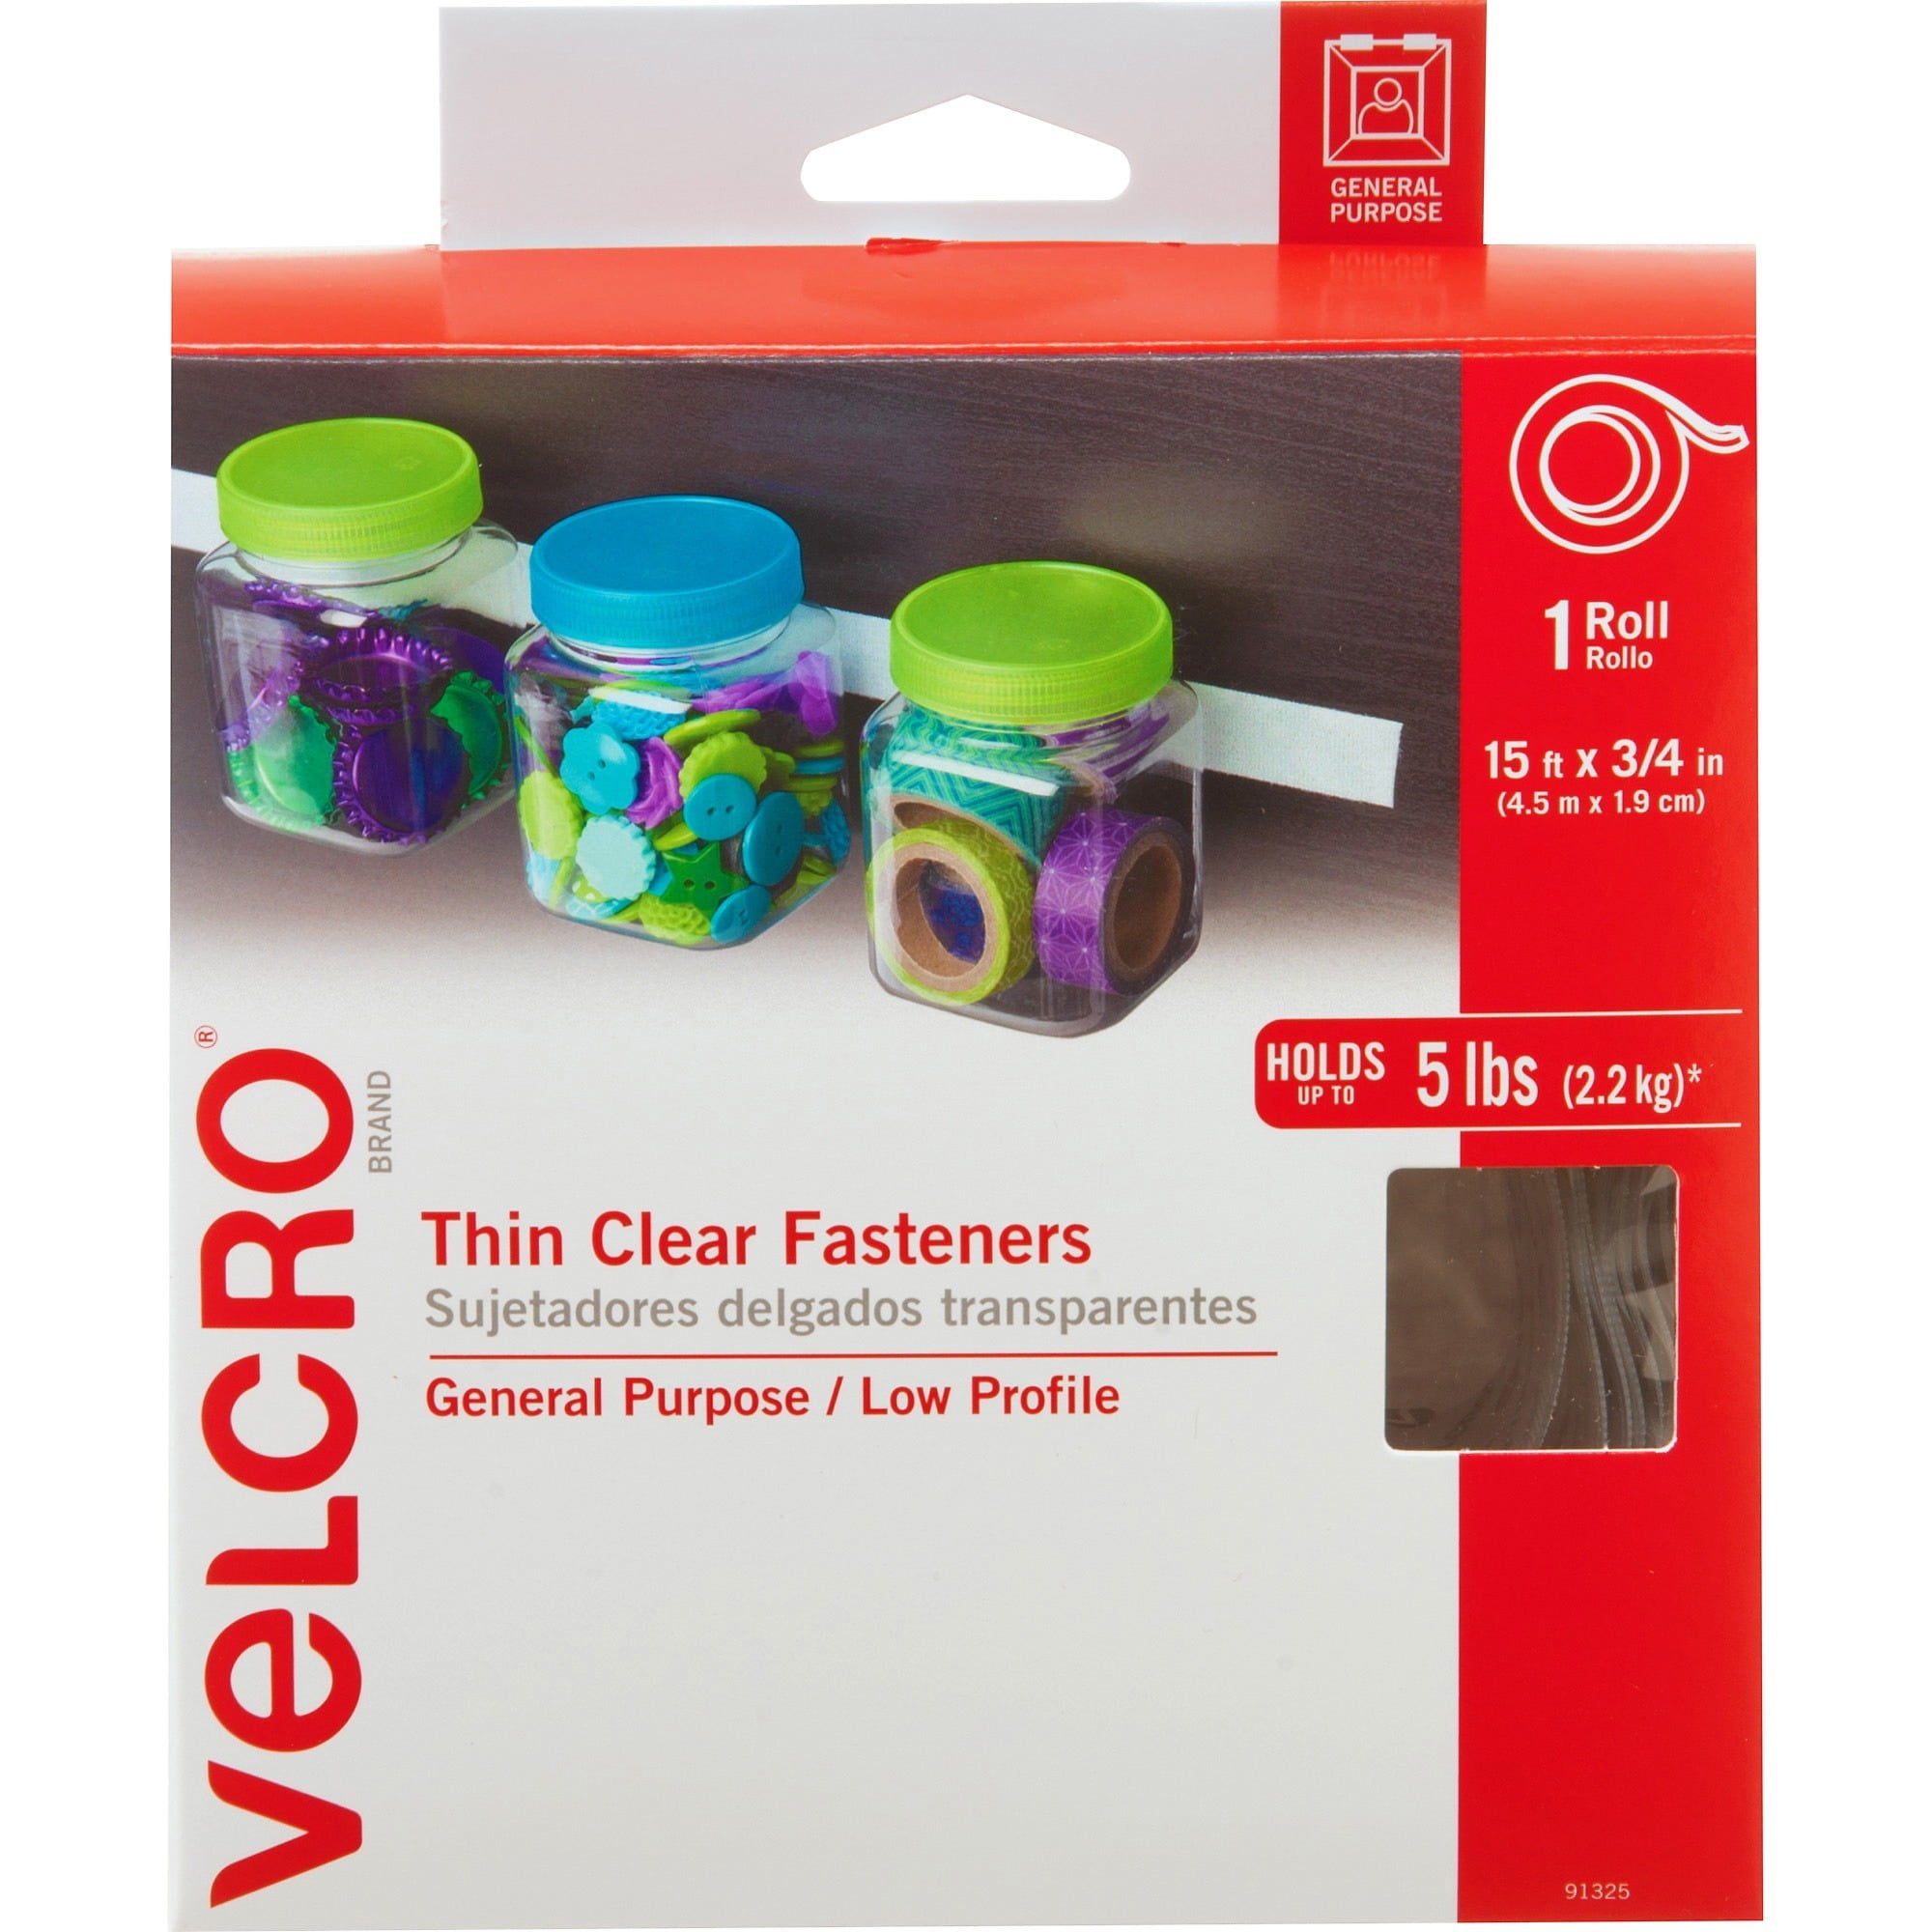 Clear Velcro Brand Small 3/8 Cirlces - 56 pkg